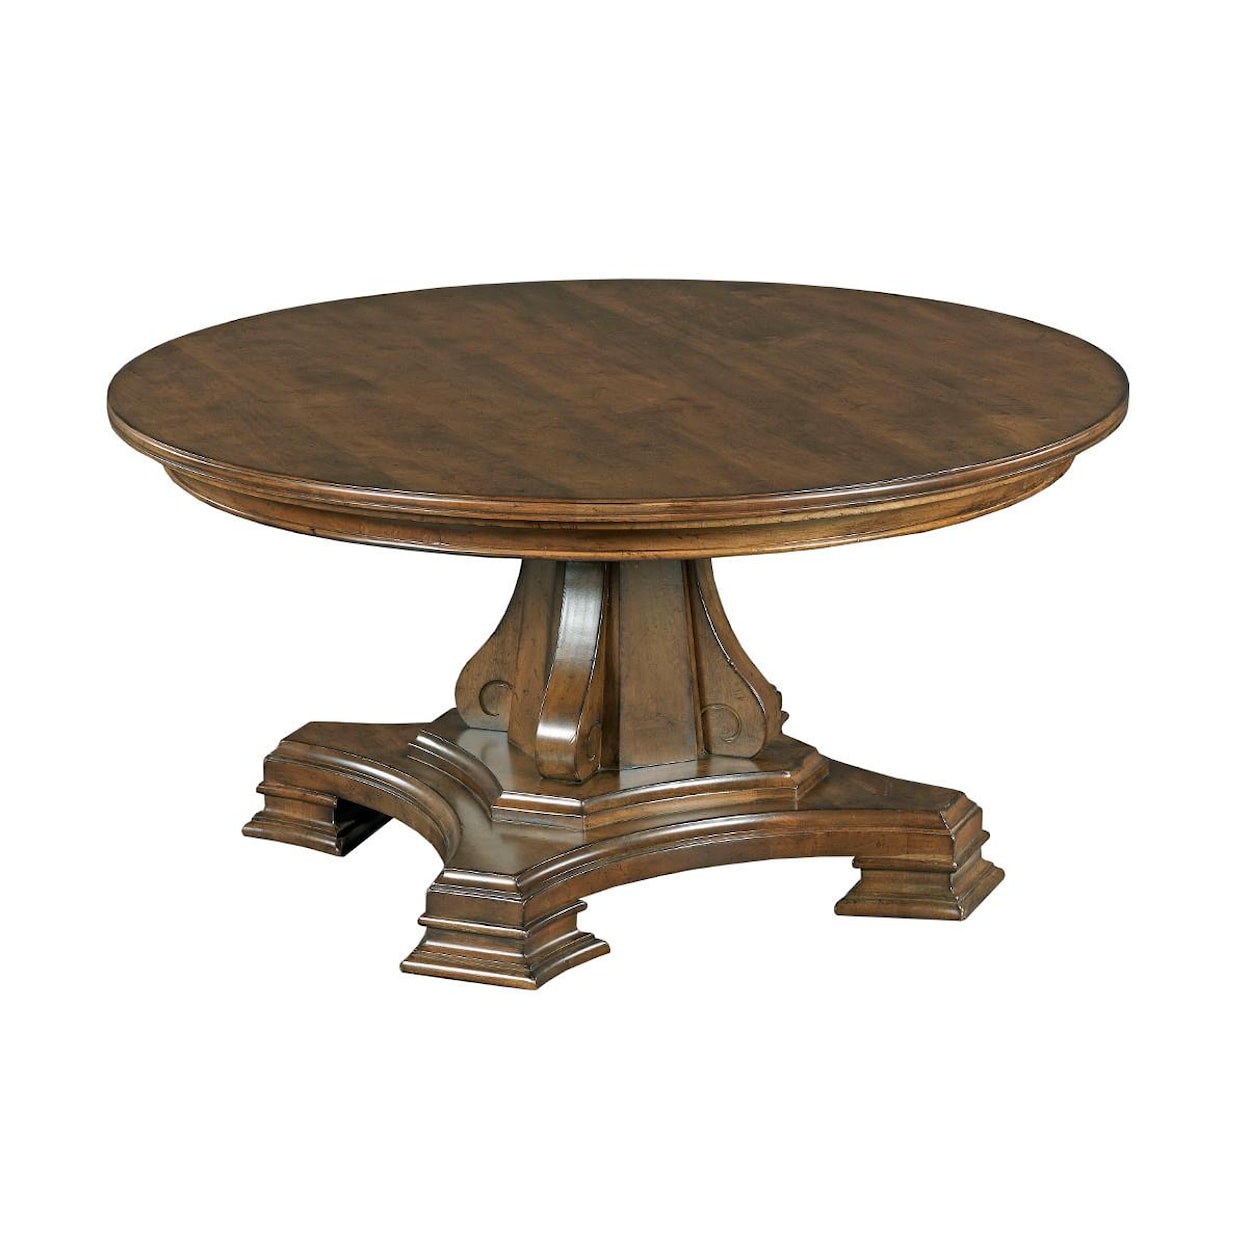 Kincaid Furniture Portolone Round Pedestal Cocktail Table